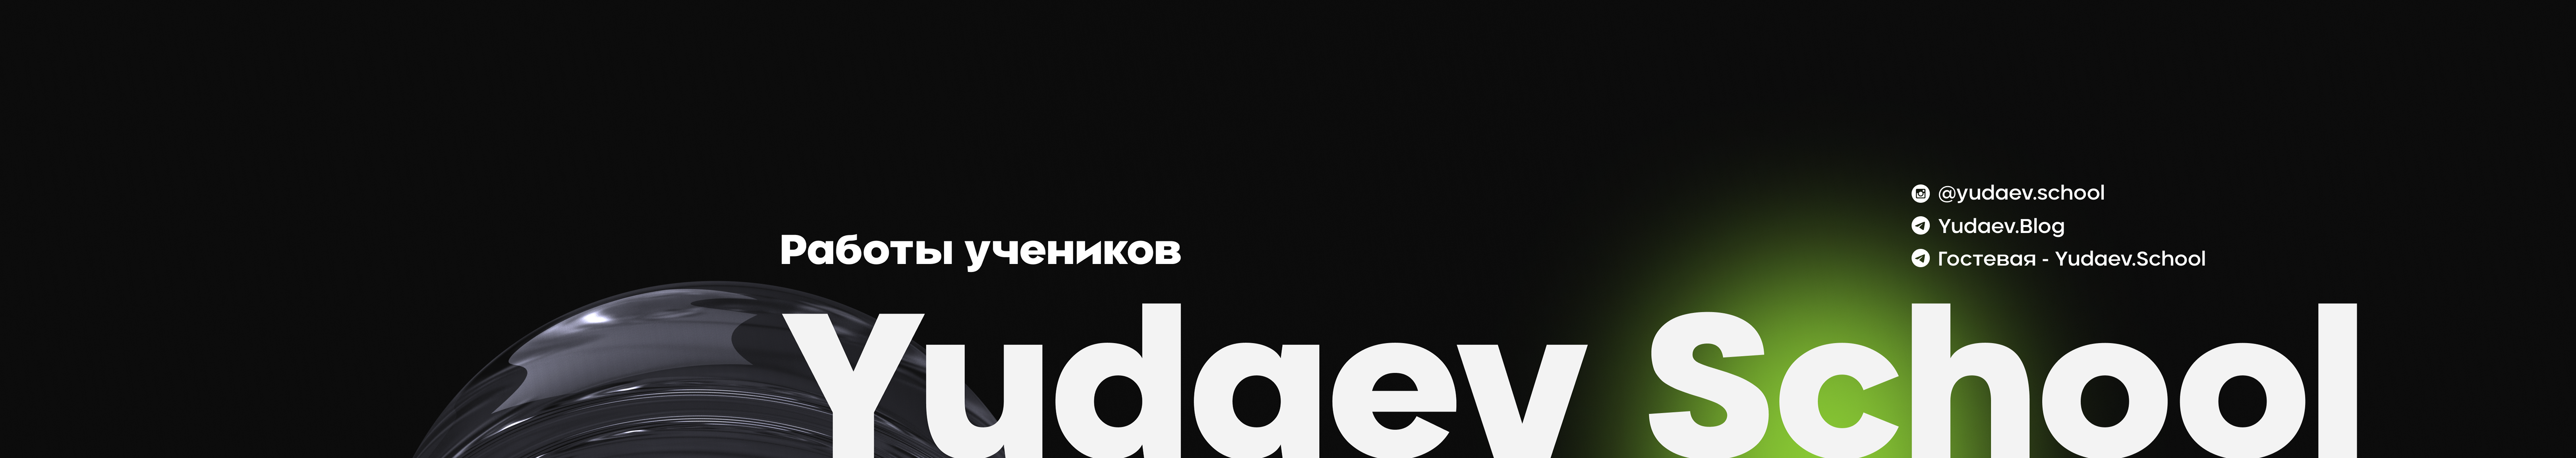 Yudaev School's profile banner